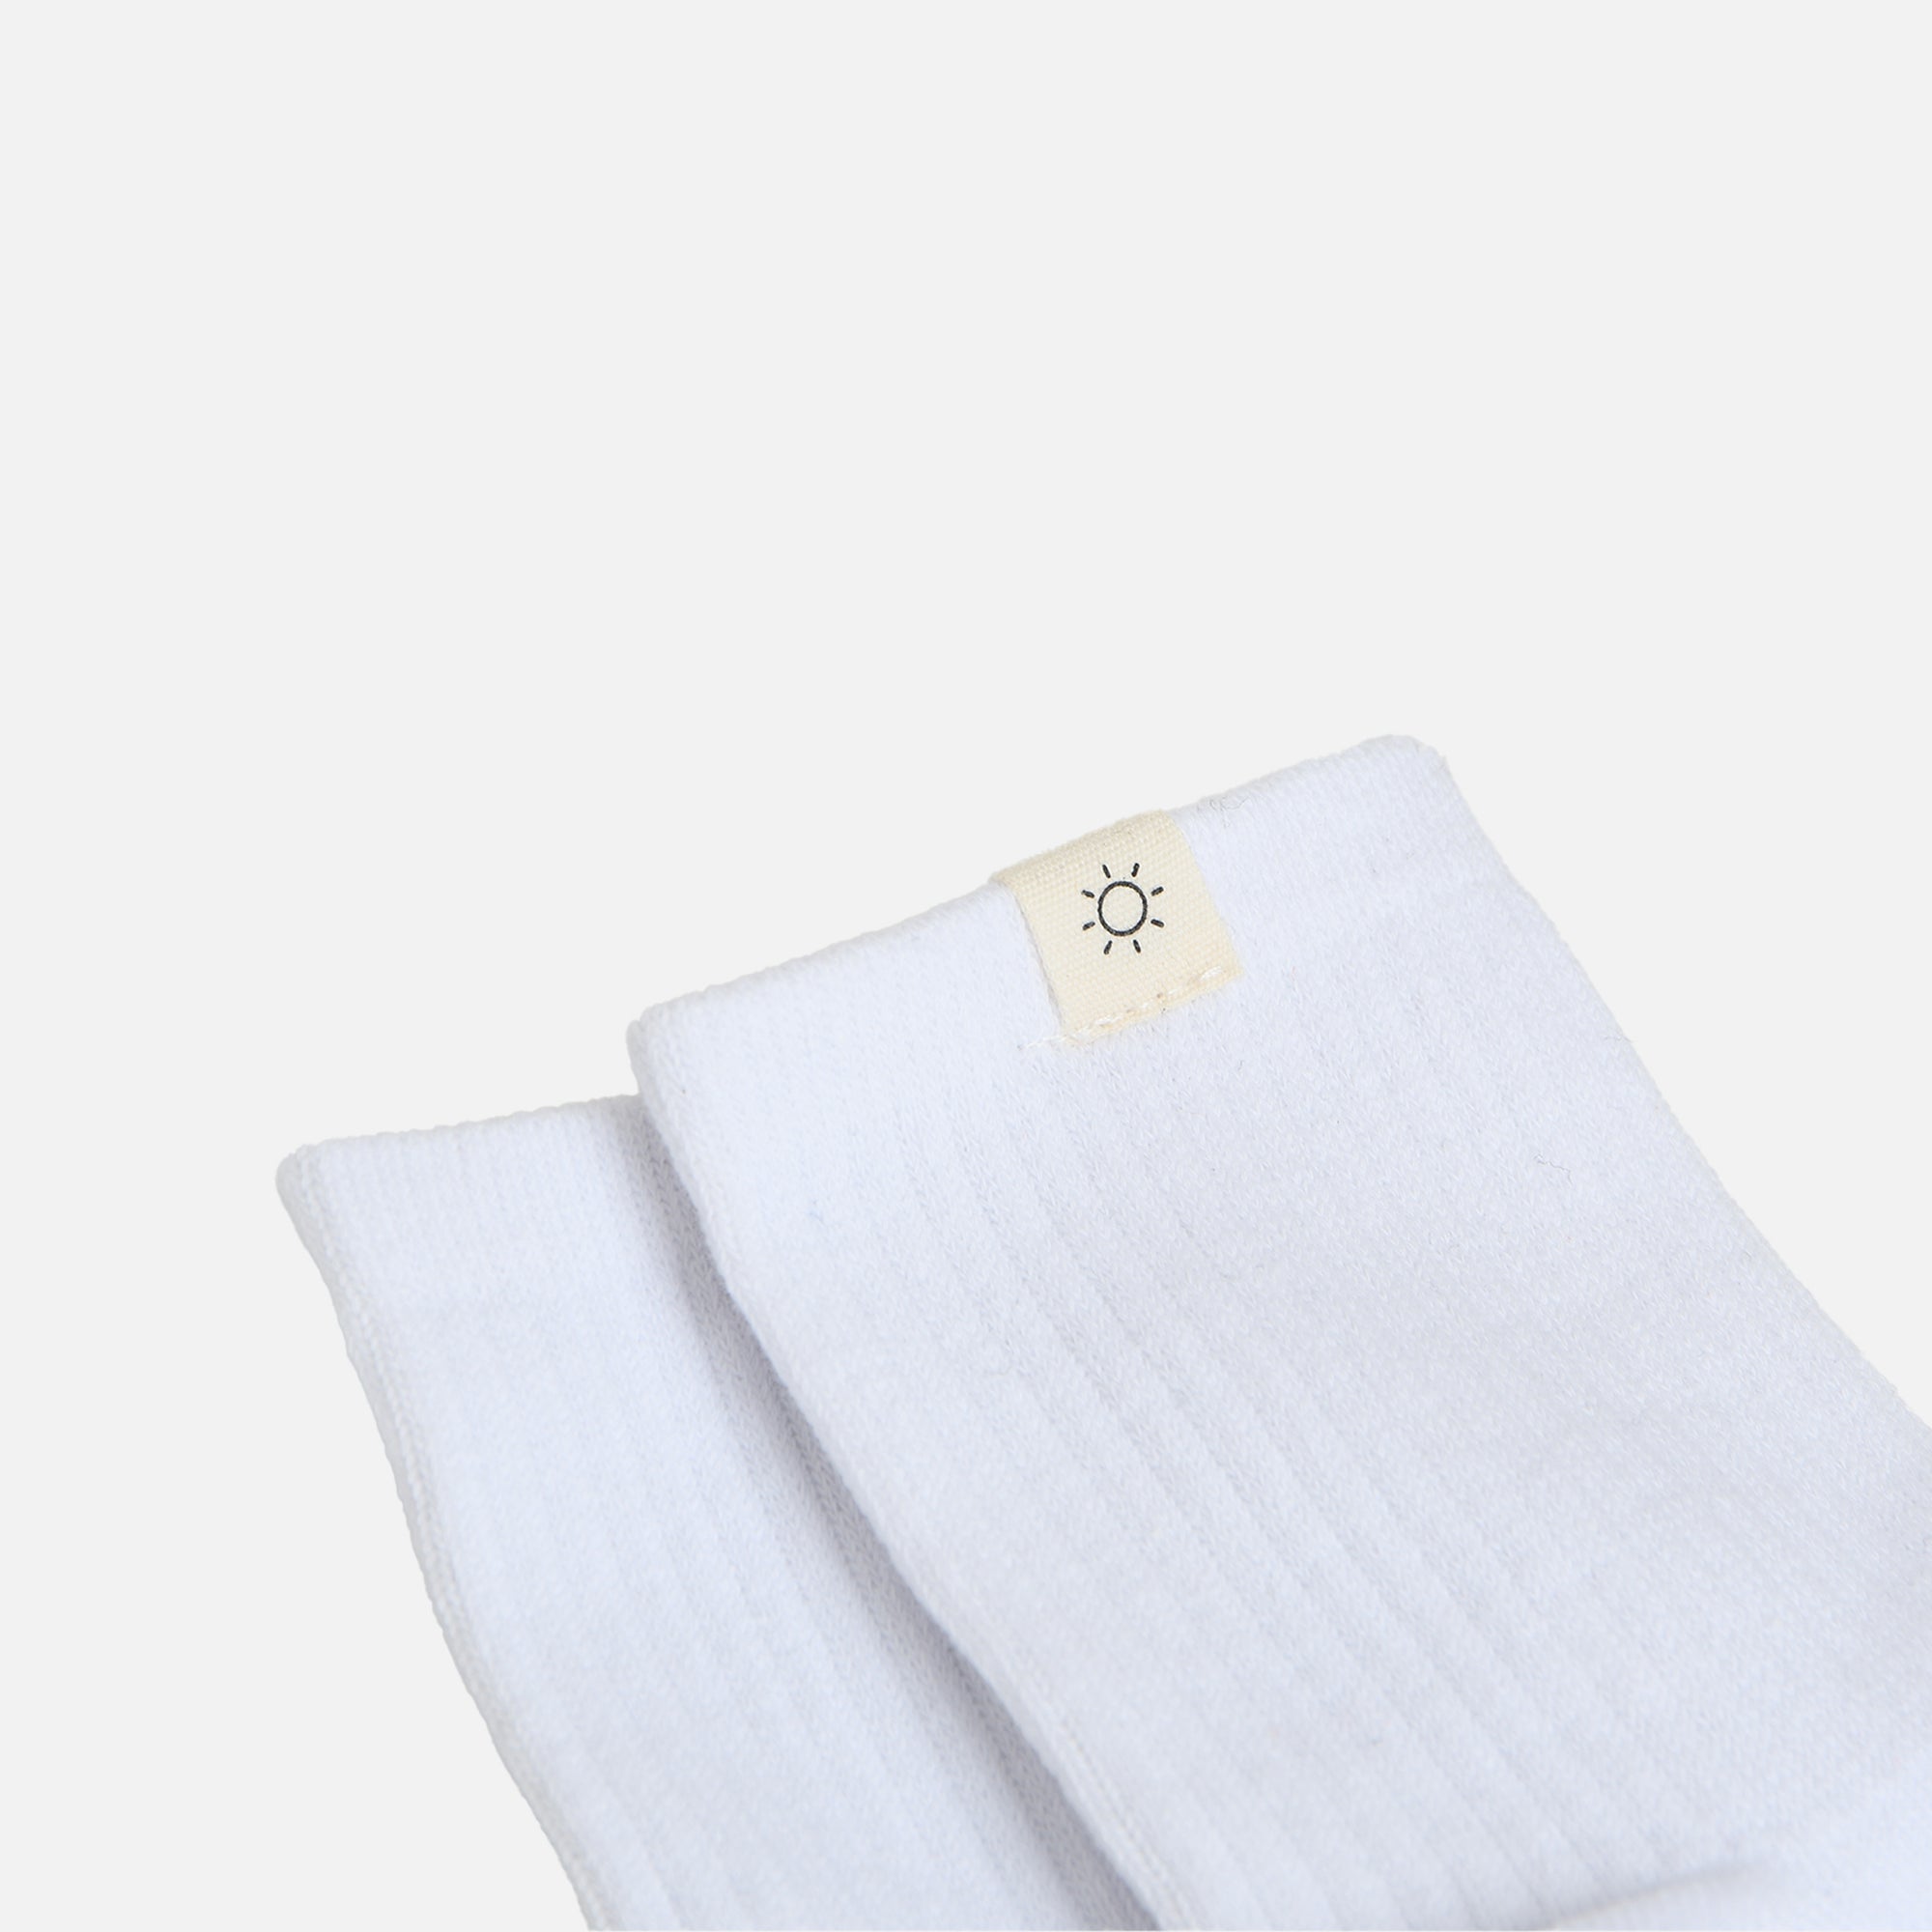 White socks with sun label